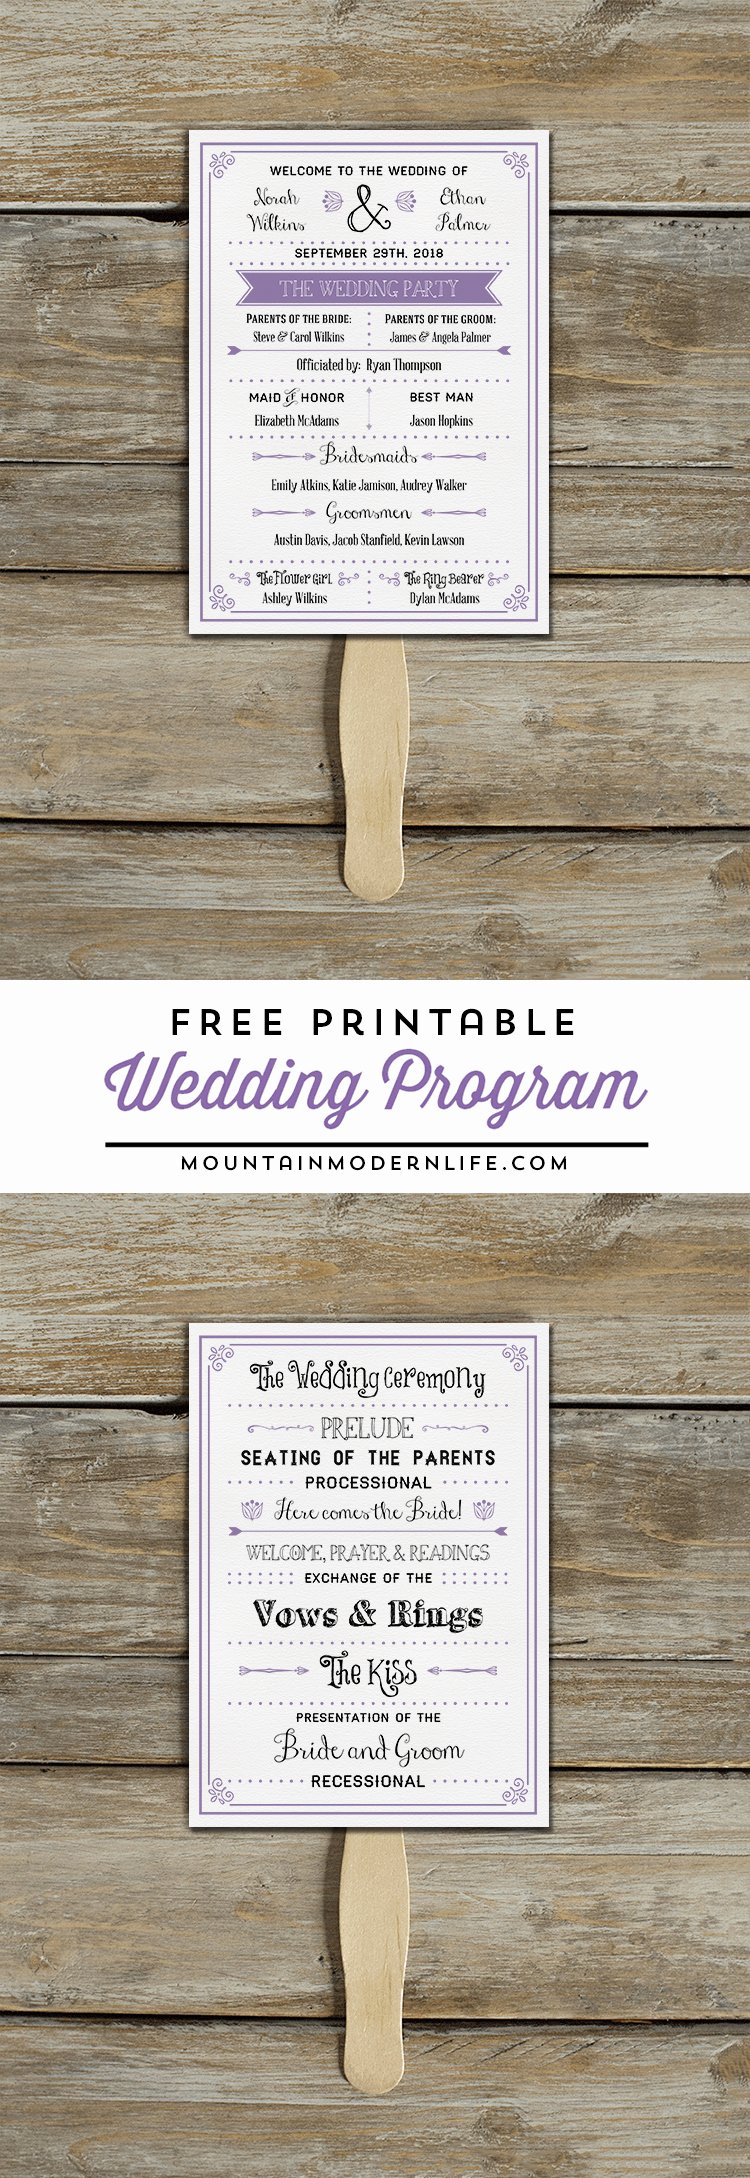 Free Printable Wedding Program